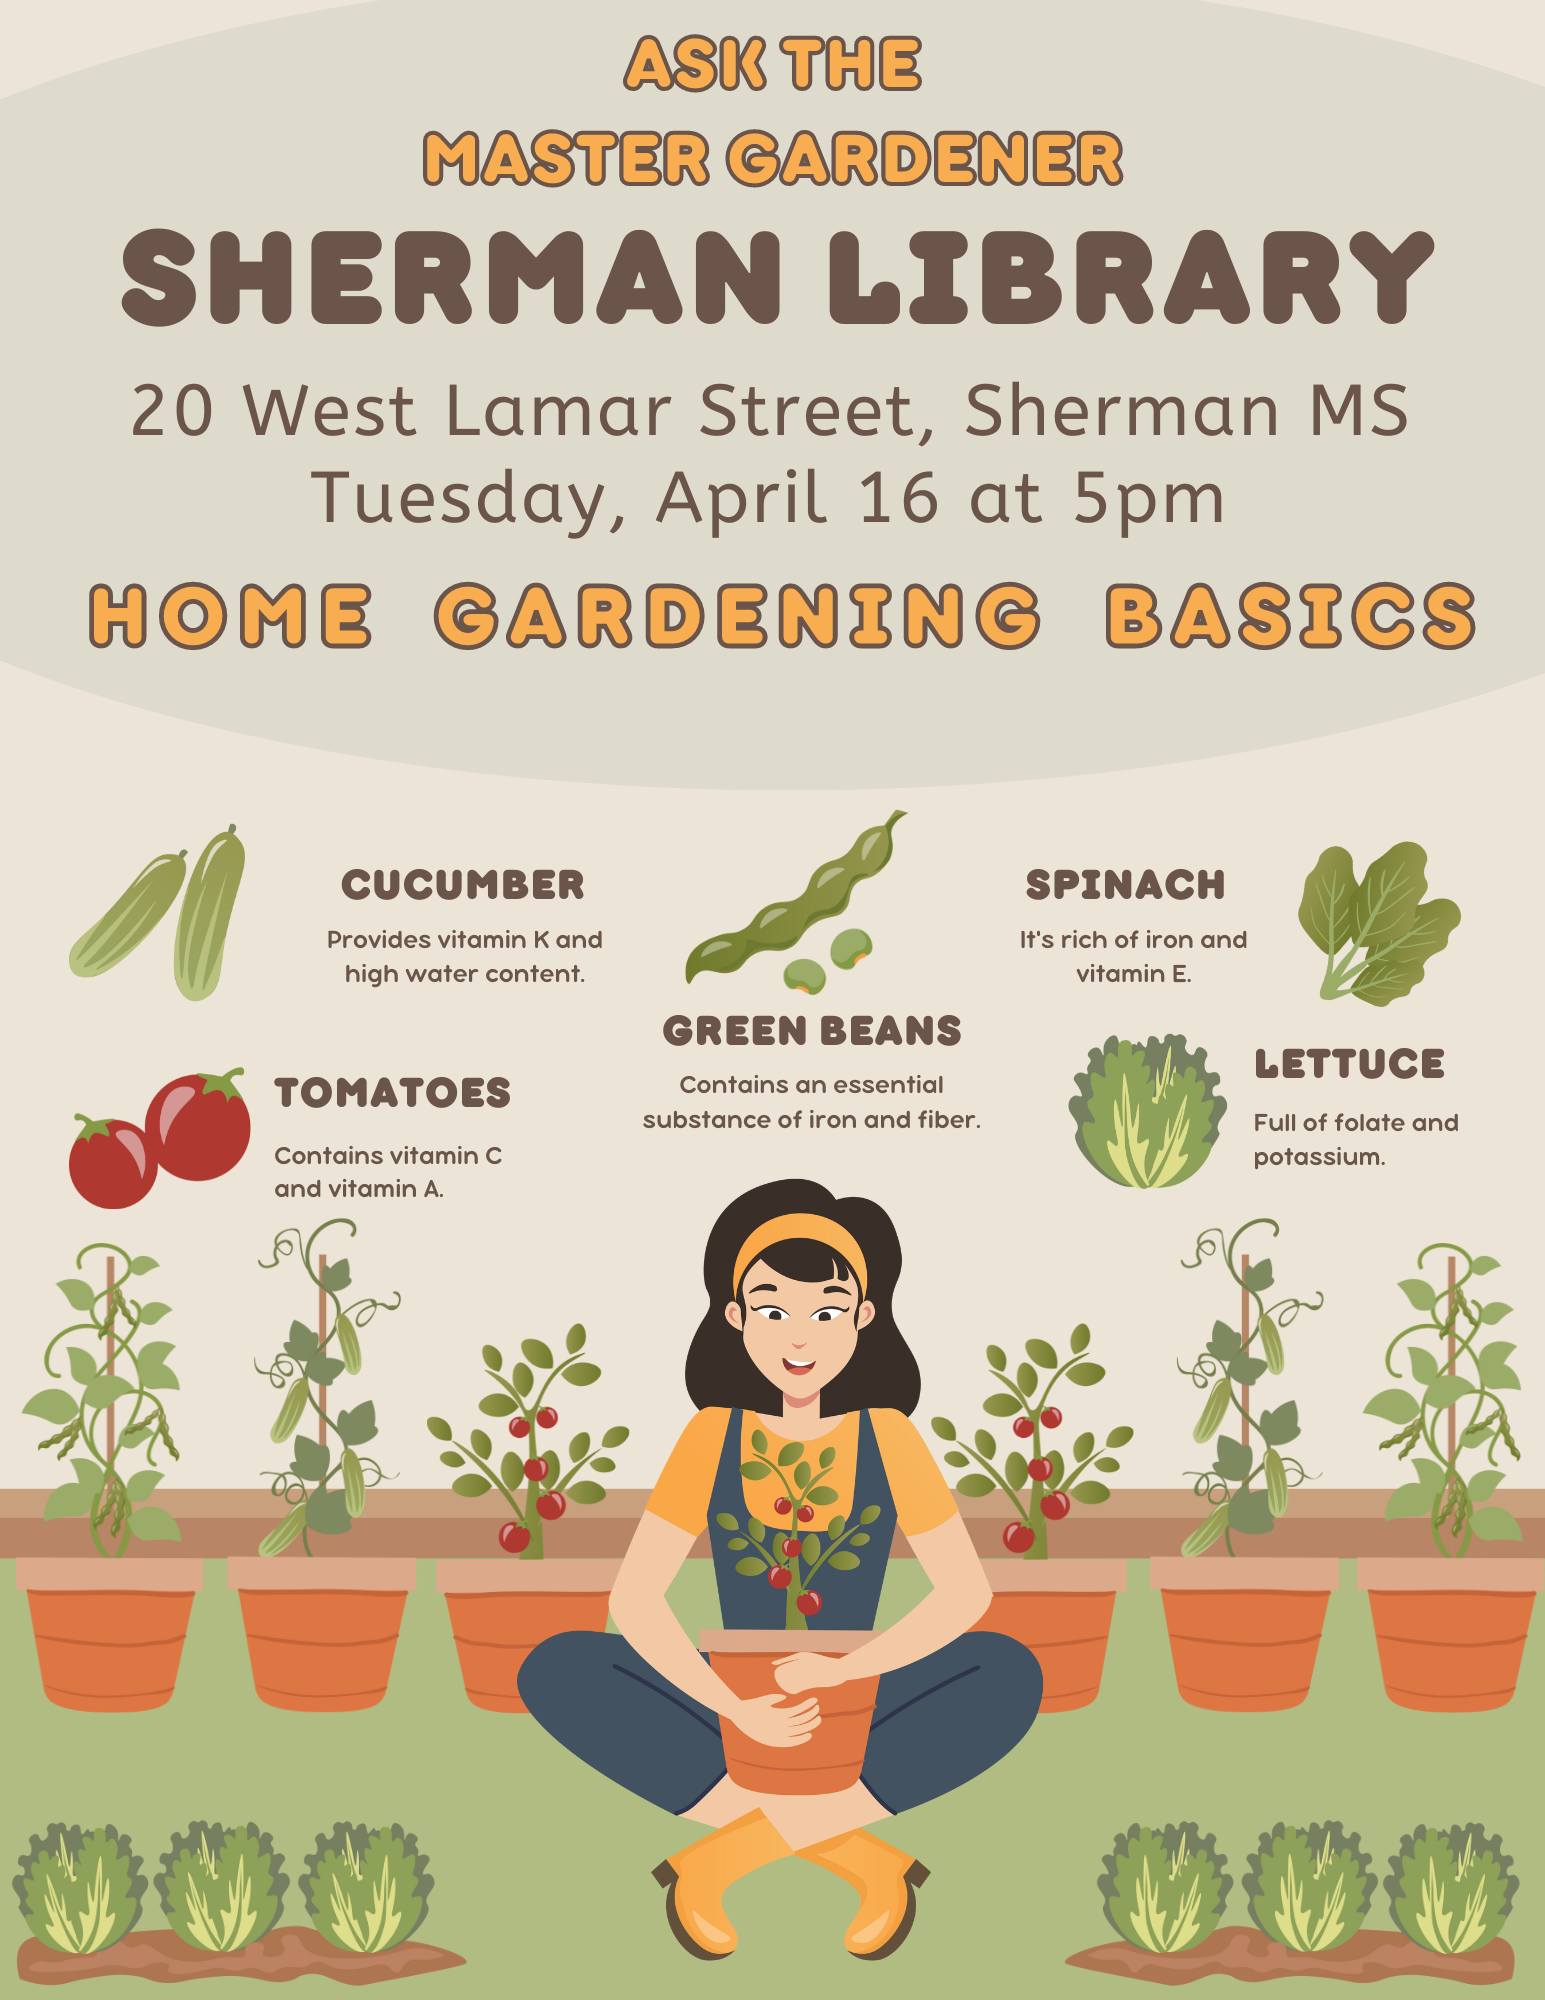 Ask the Master Gardener. Sherman Library. 20 West Lamar Street, Sherman MS. Tuesday, April 16 at 5 pm. Home Gardening Basics. 